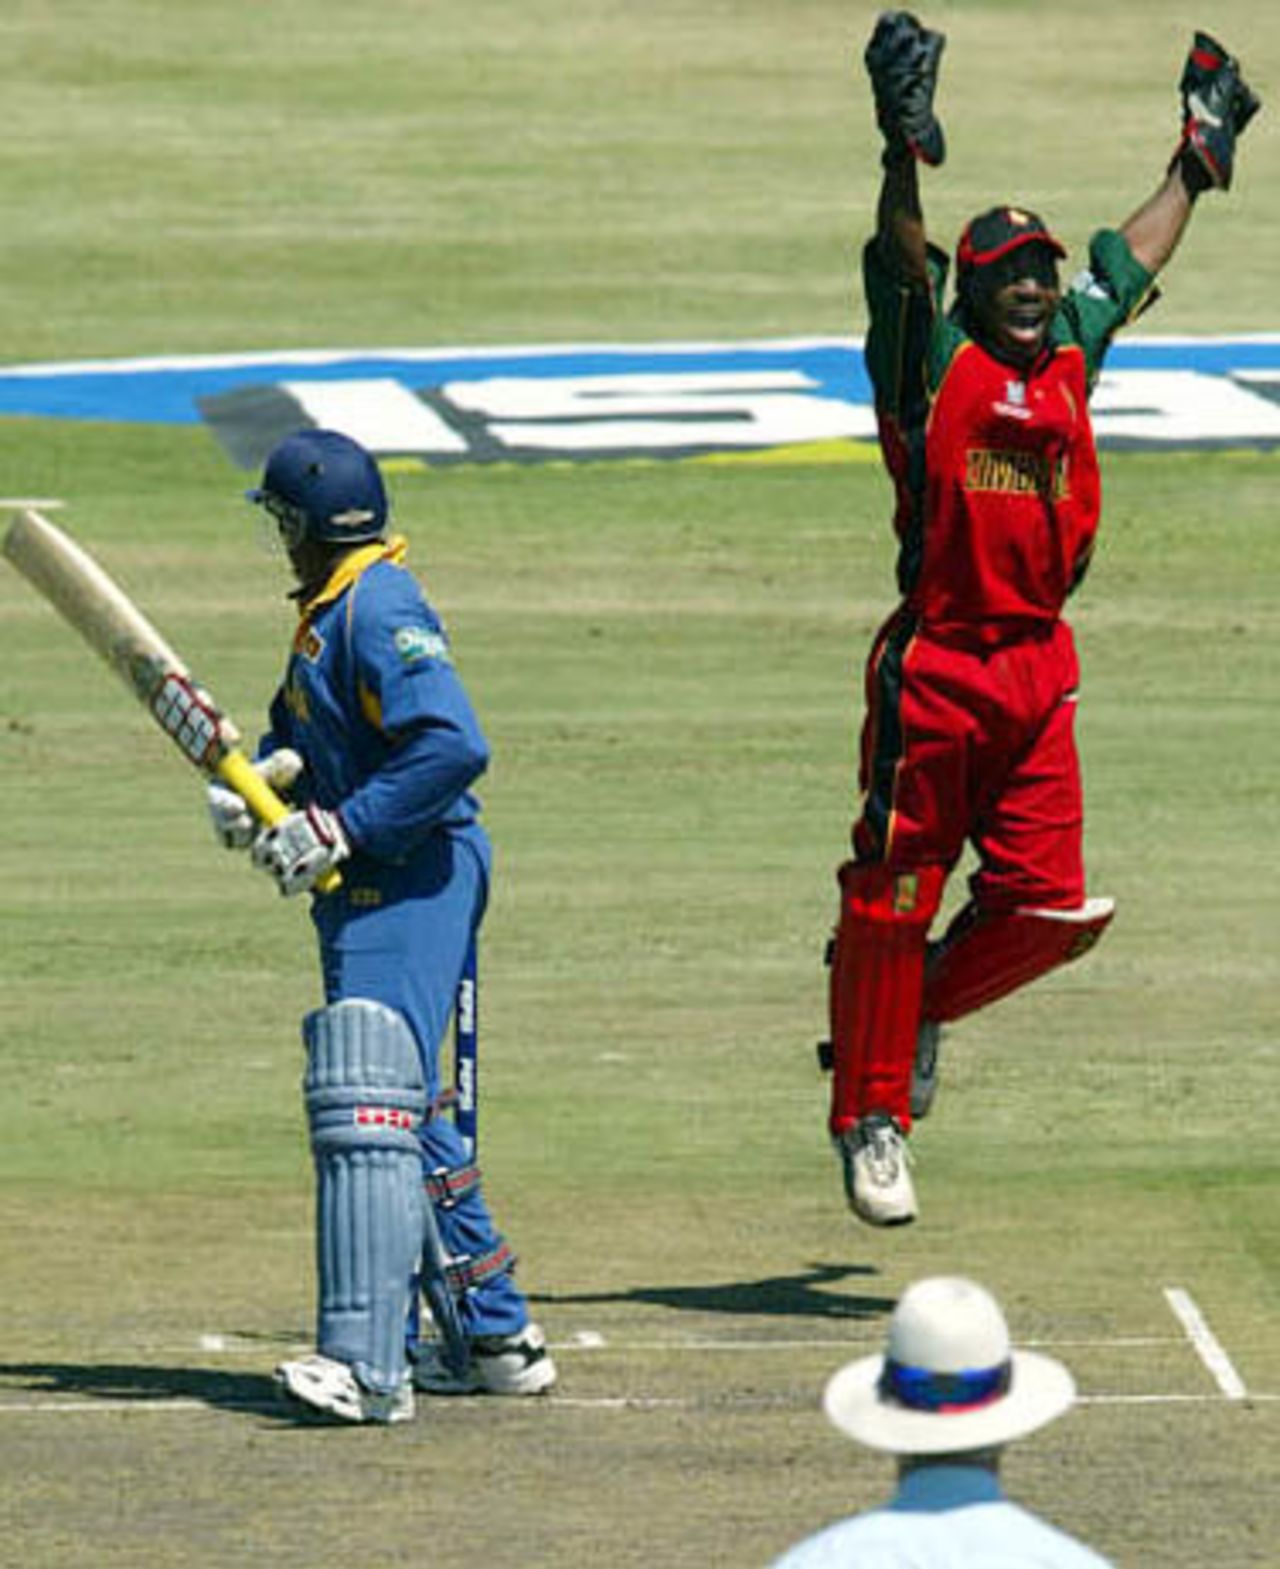 World Cup 2003 - Sri Lanka v Zimbabwe at East London, 15th March 2003